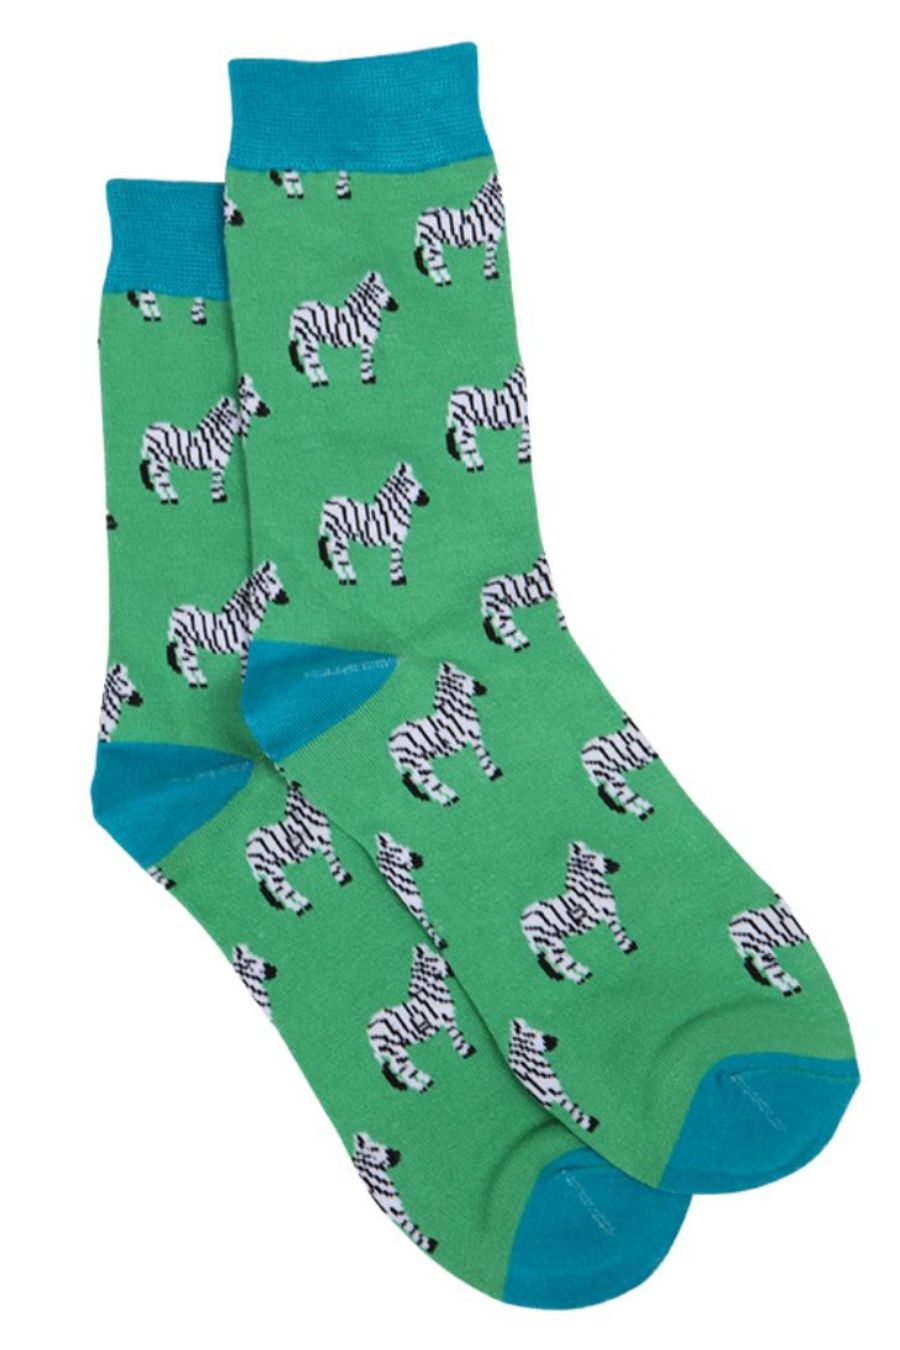 green, blue dress socks with zebras all over